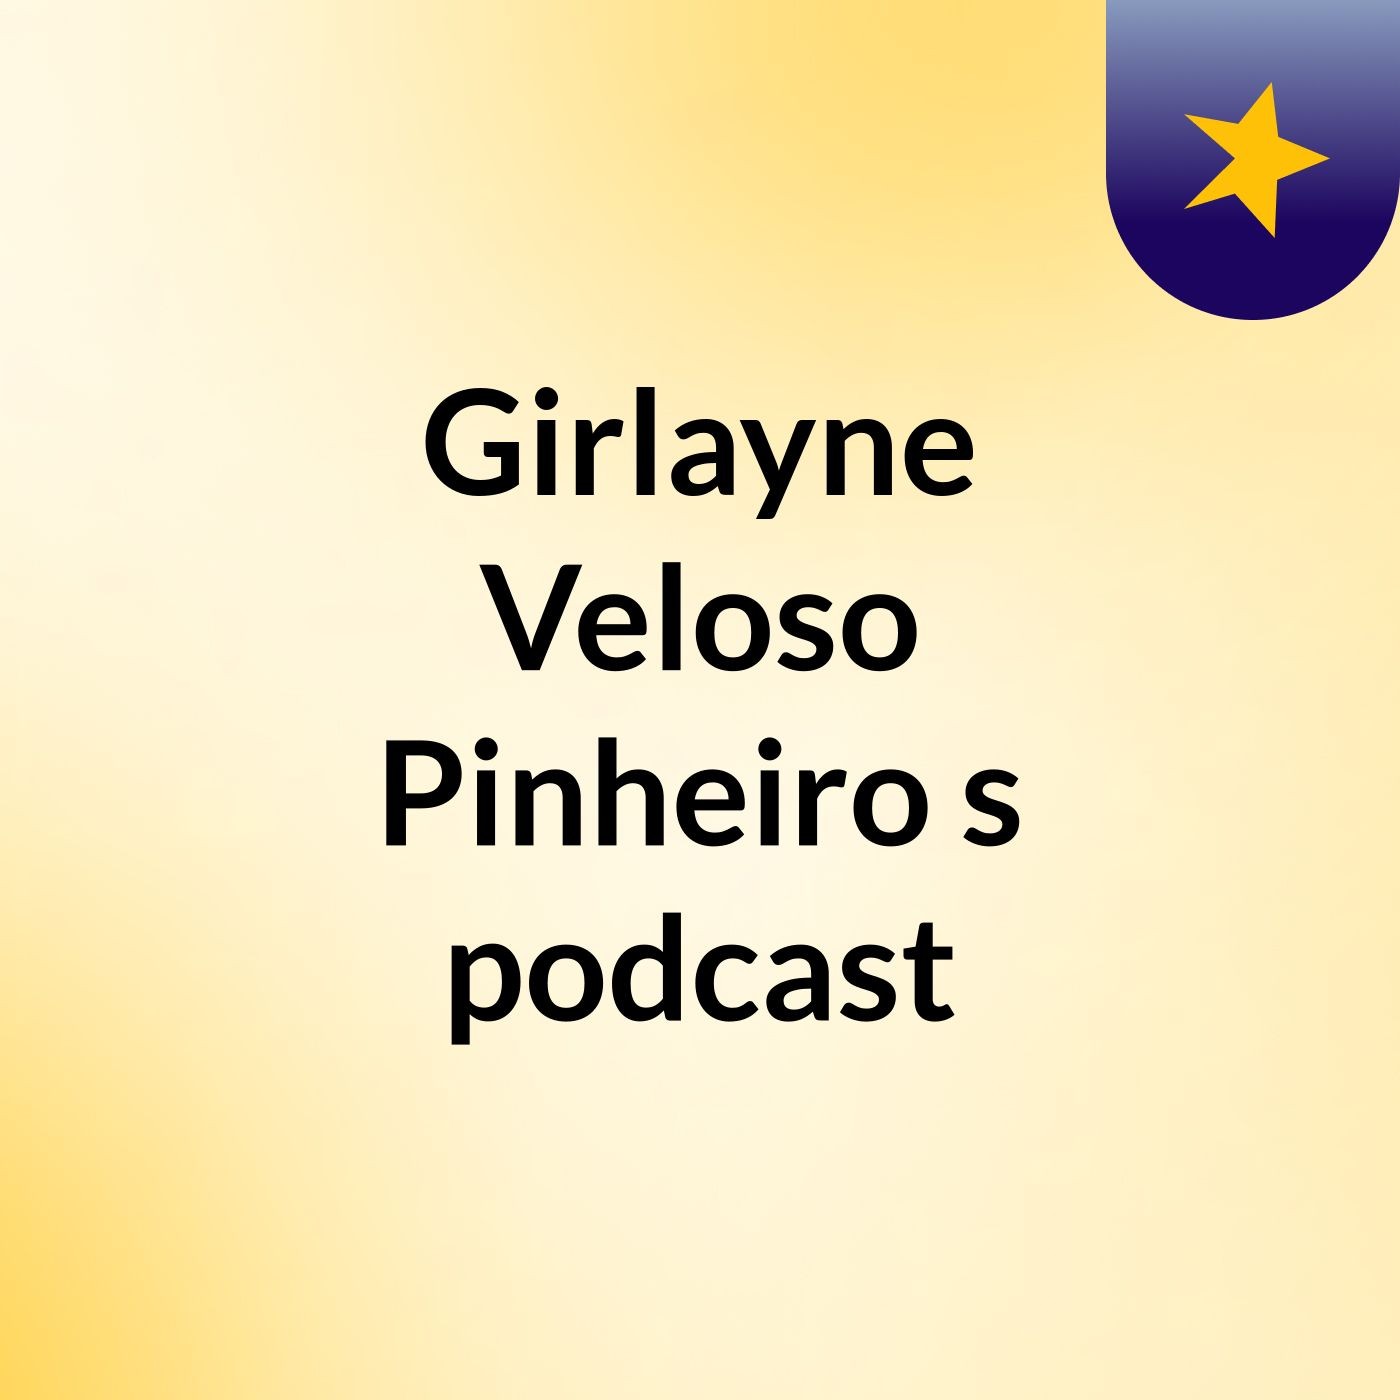 Girlayne Veloso Pinheiro's podcast